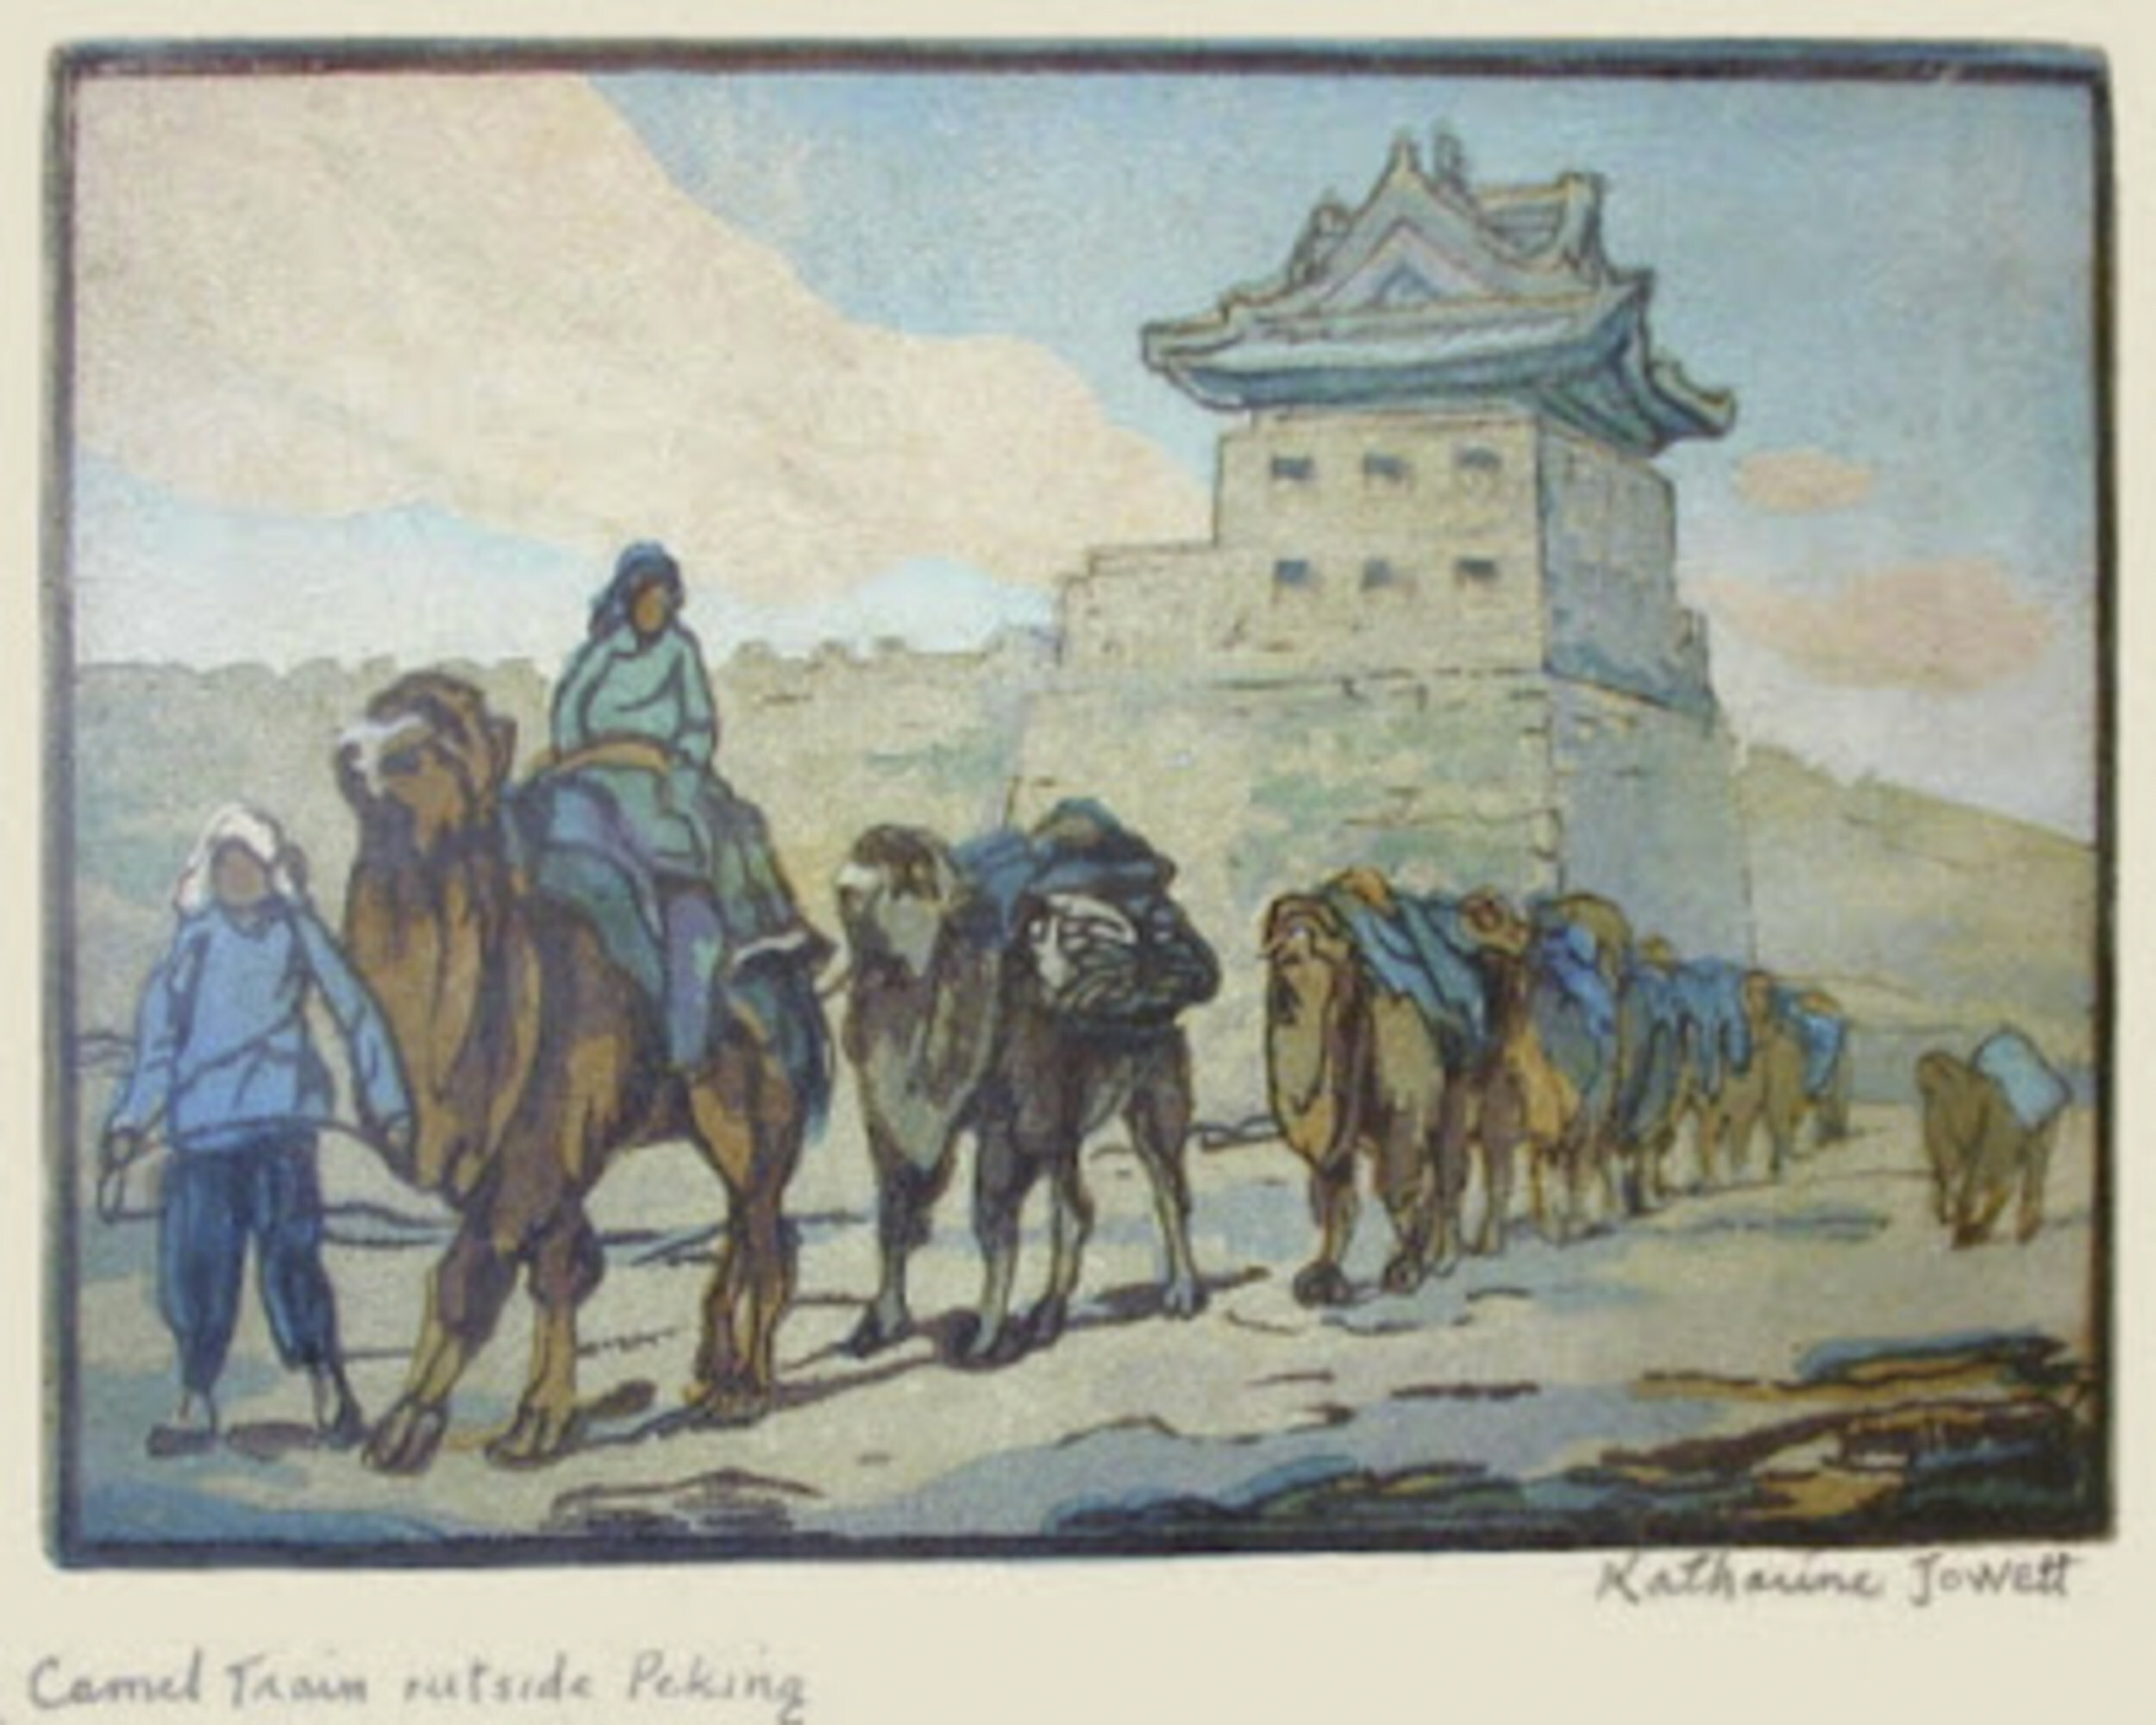 Artwork Camel Train Outside Peking - lithograph.jpg by Katharine Jowatt&#xA;&#xA;Credit: Katharine Jowatt